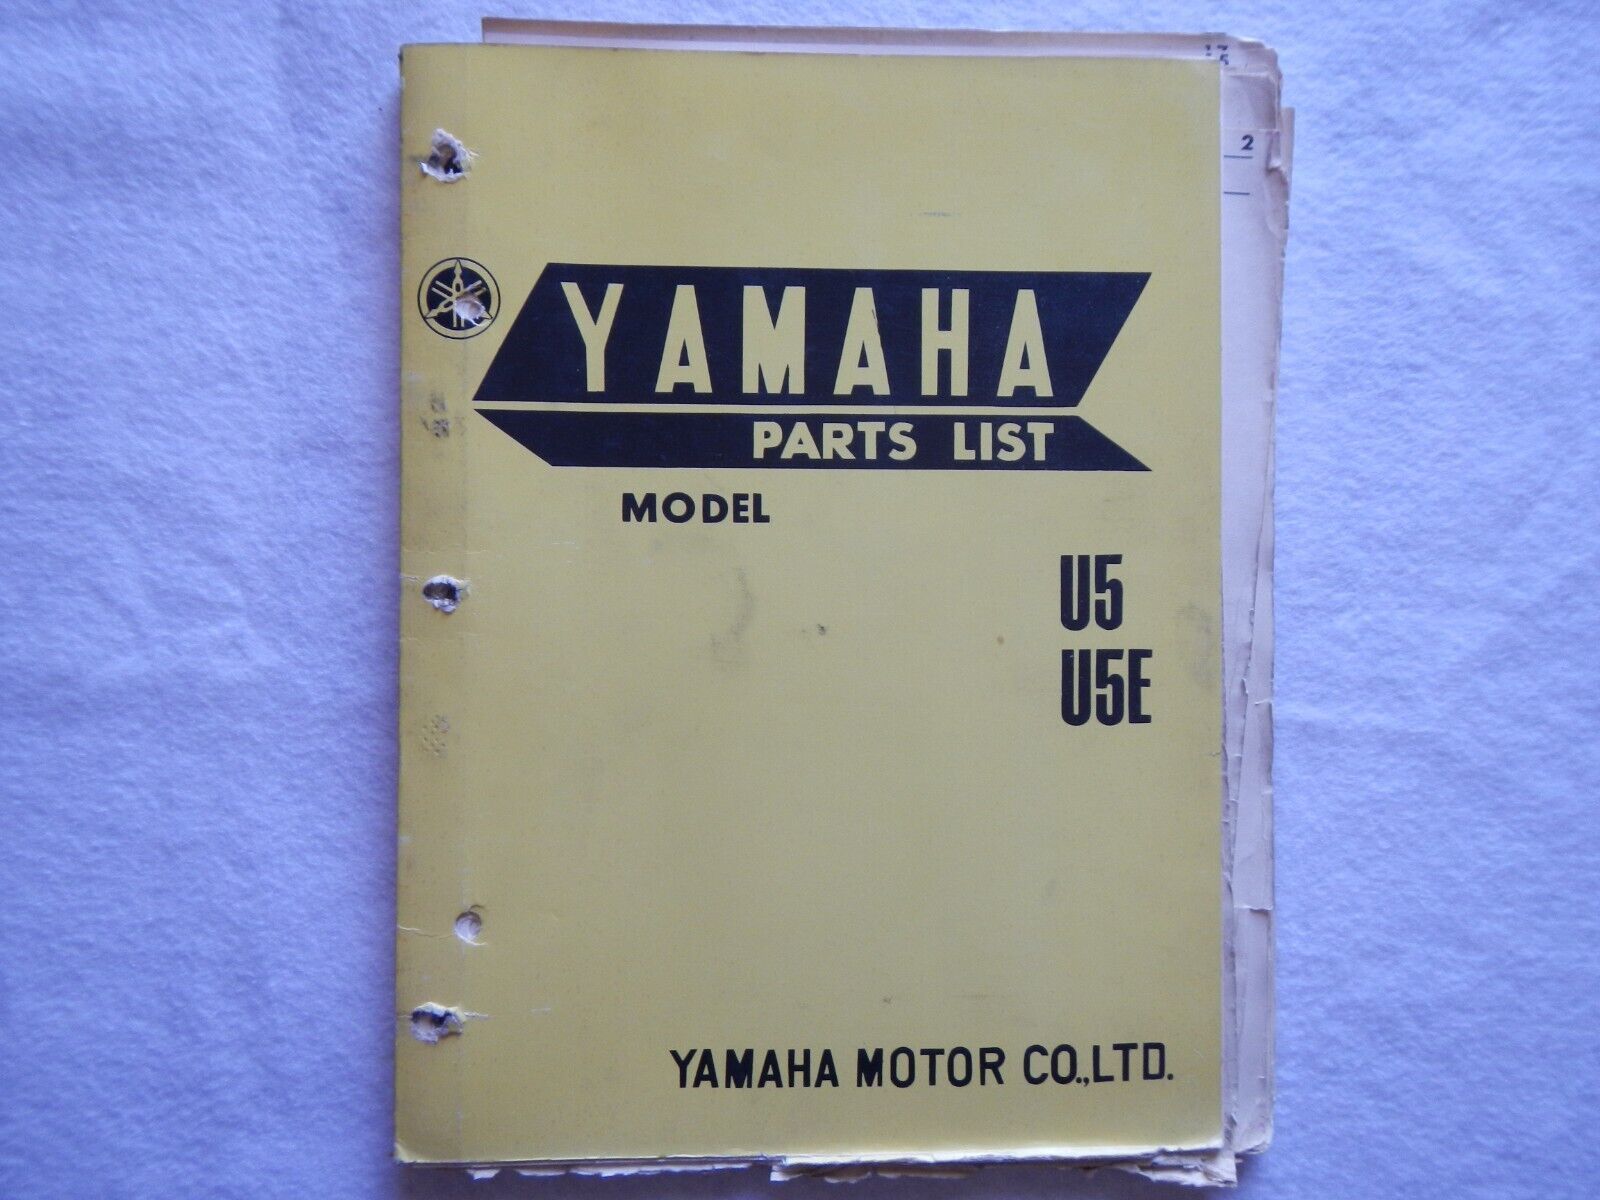 Primary image for 1967 1968 1969 Yamaha 50 U5 U5E Parts manual book list